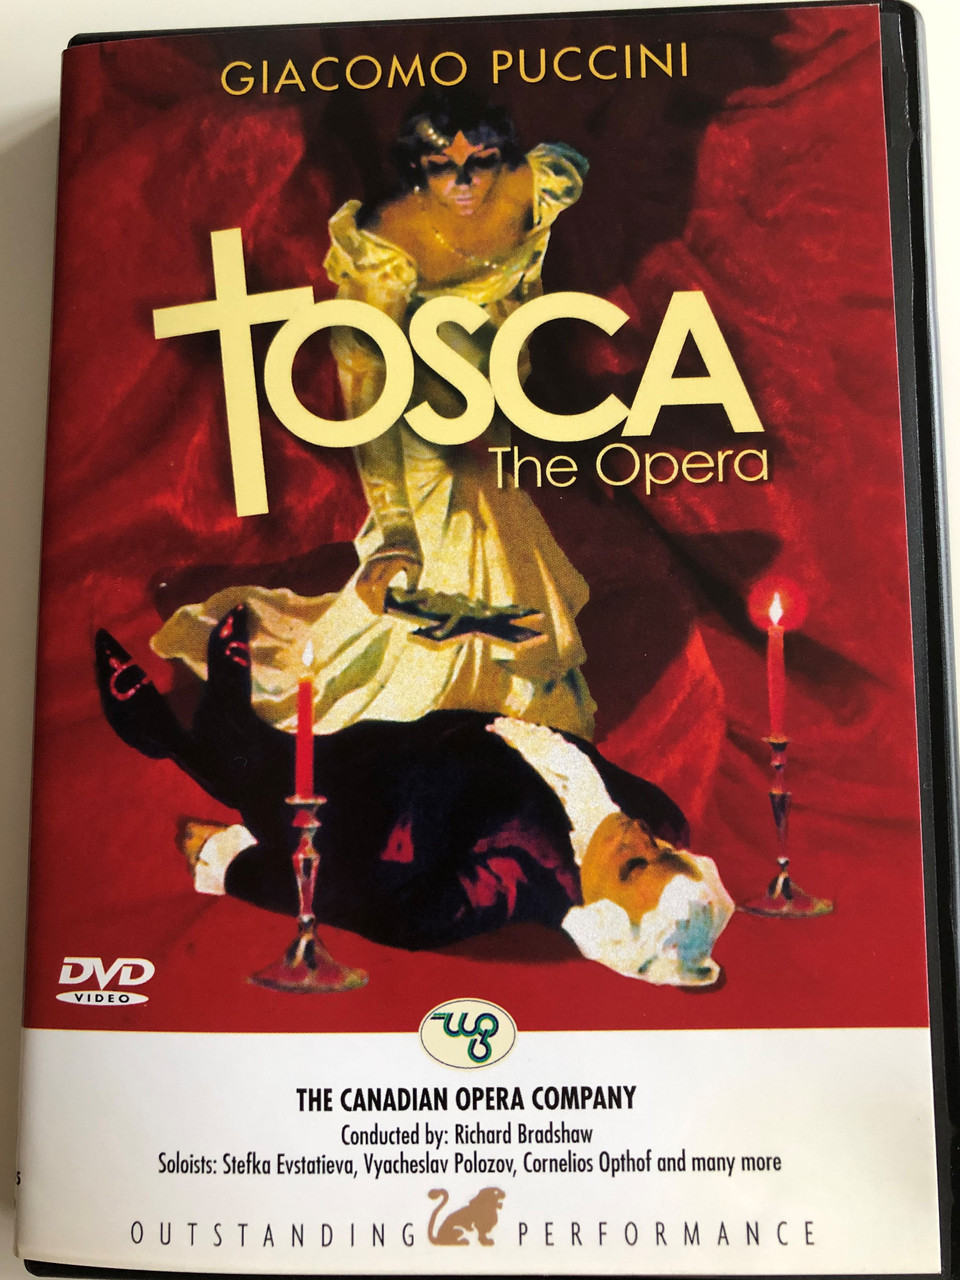 Giacomo Puccini - Tosca the Opera DVD 2006 / The Canadian Opera Company /  Conducted by Richard Bradshaw / Soloists: Stefka Evstatieva, Vyacheslav  Polozov, Cornelios Opthof and many more - bibleinmylanguage